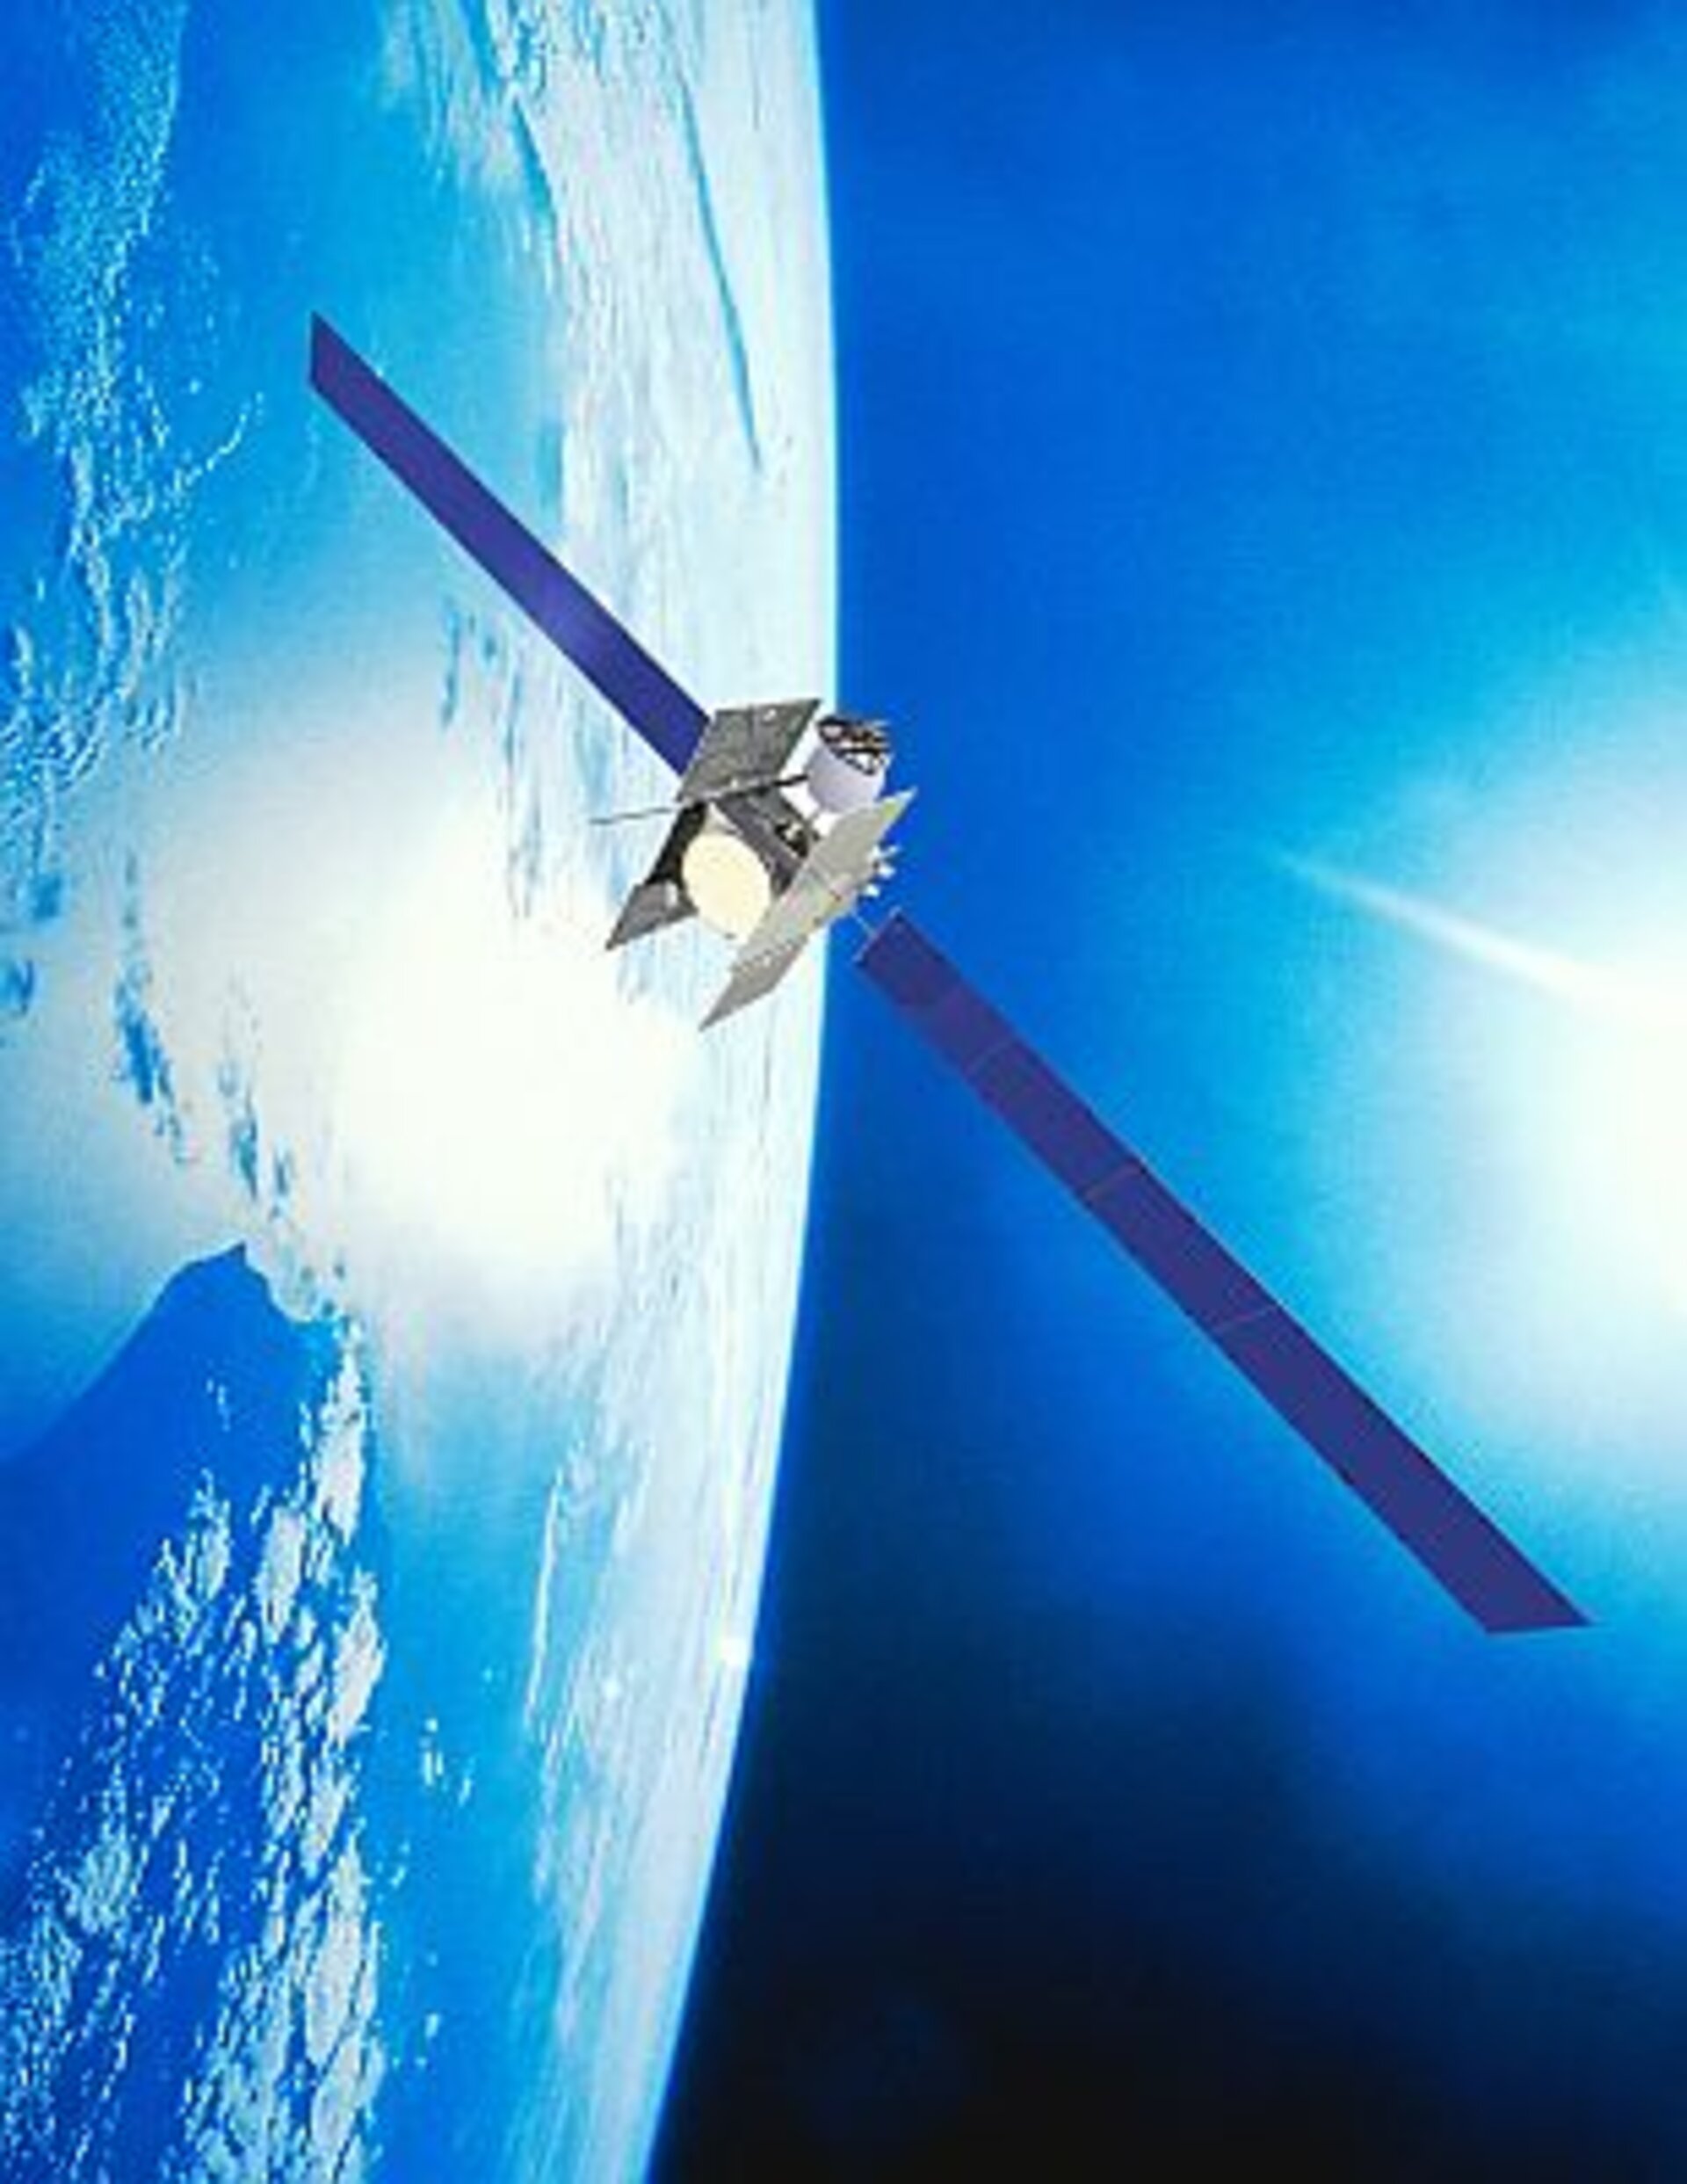 DIRECTV's Spaceway F2 satellite